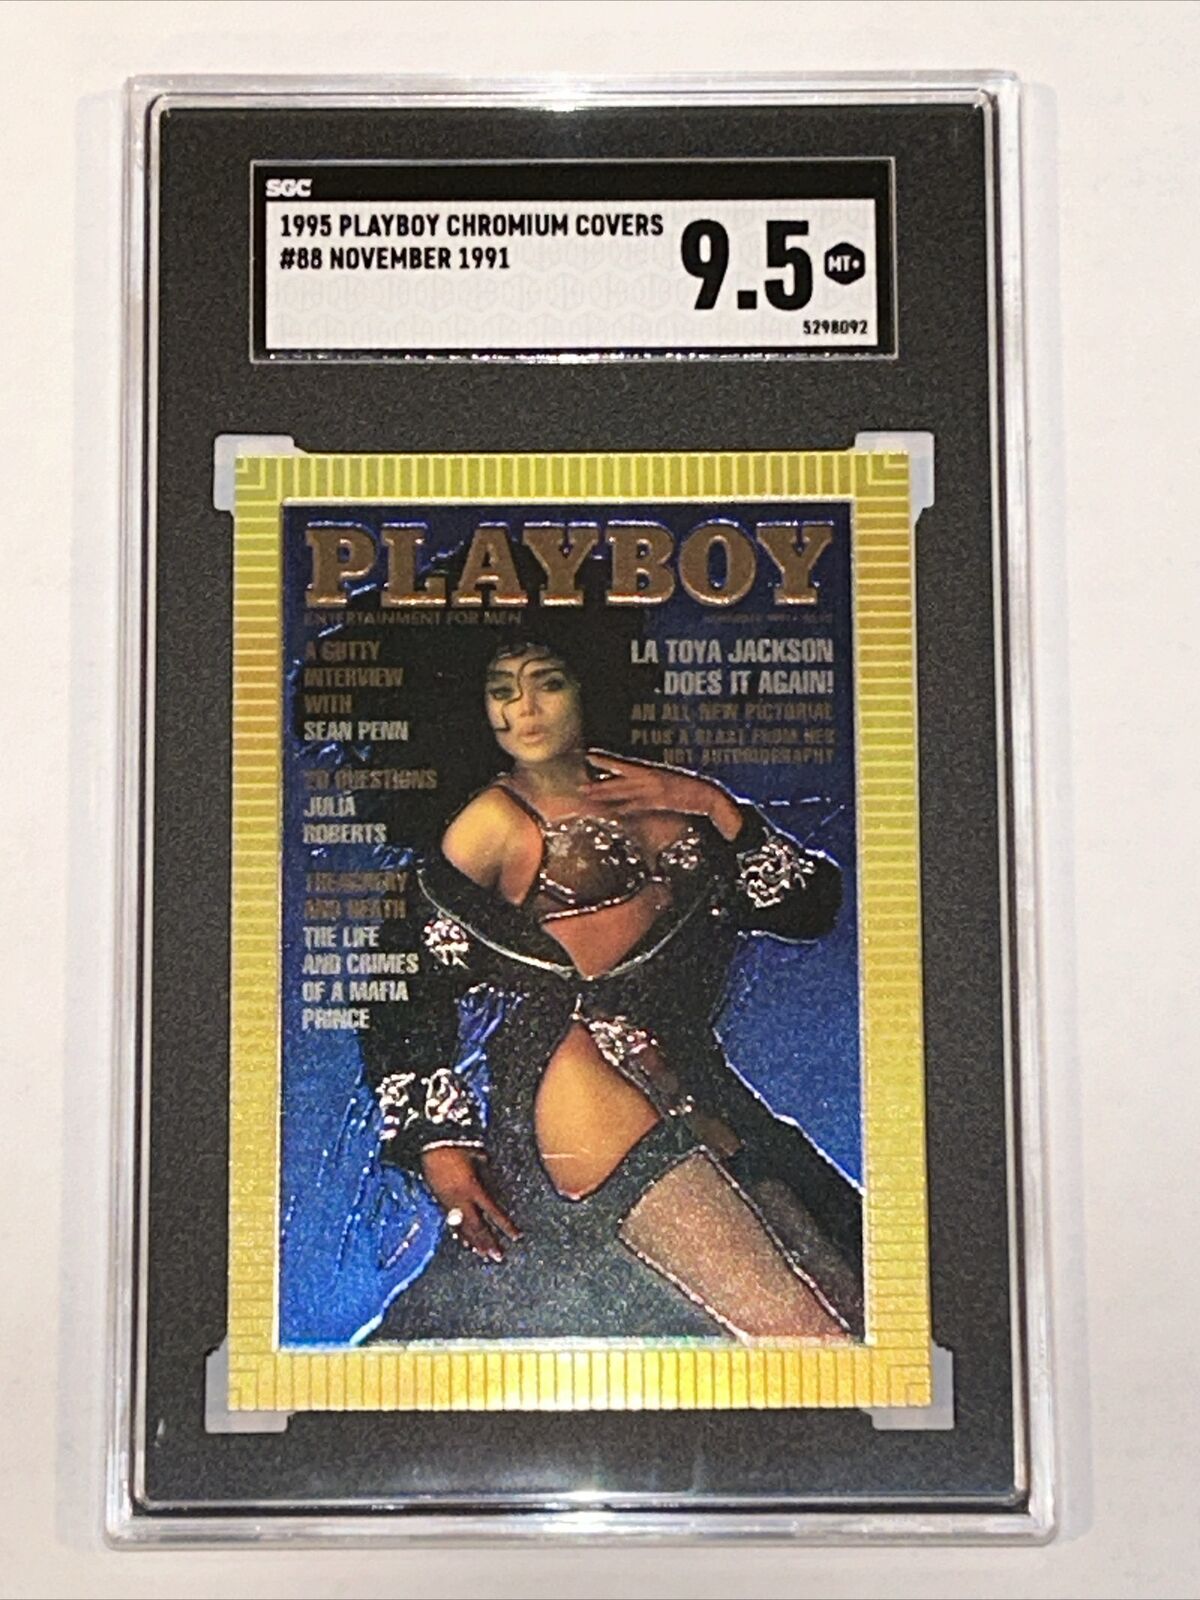 1995 Playboy Chromium Covers La Toya Jackson #88 November 1991 Graded SGC By 9.5